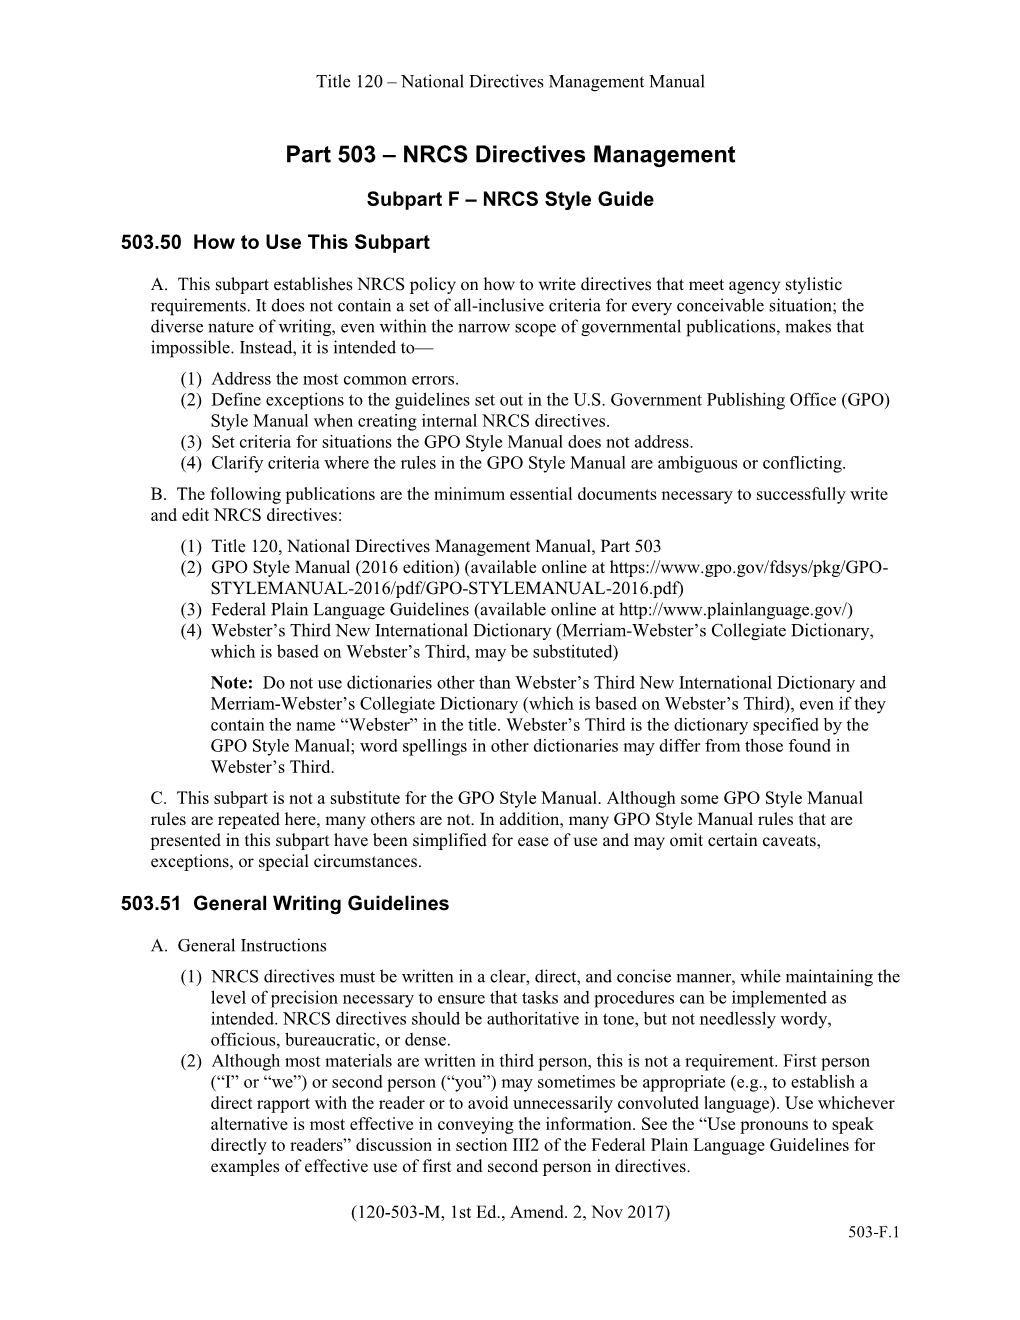 Part 503 – NRCS Directives Management